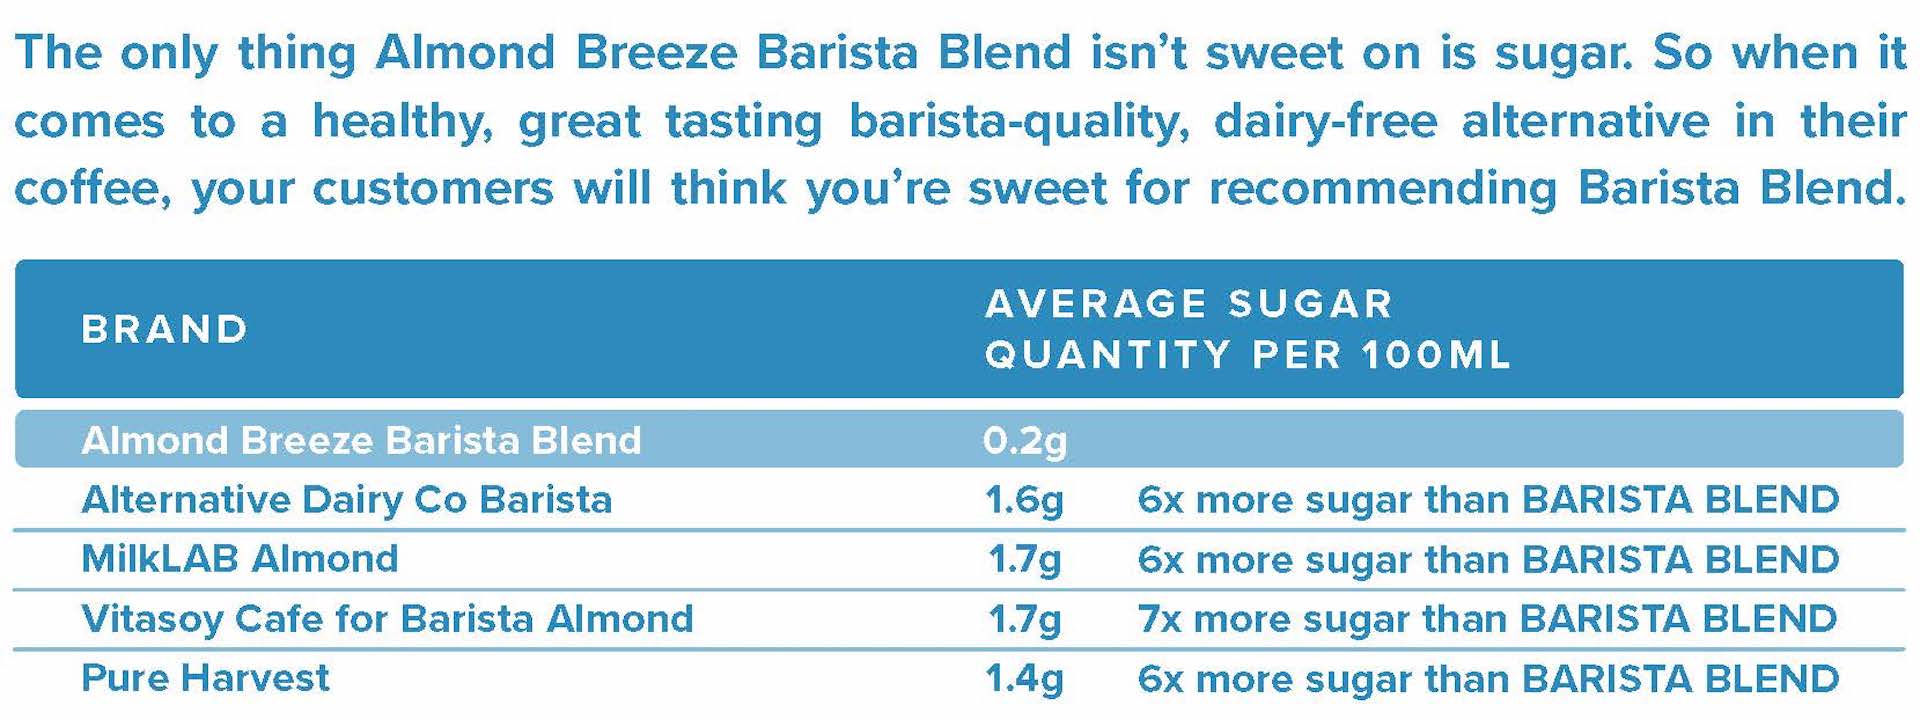 Barista Chart 2 - Less Sugar